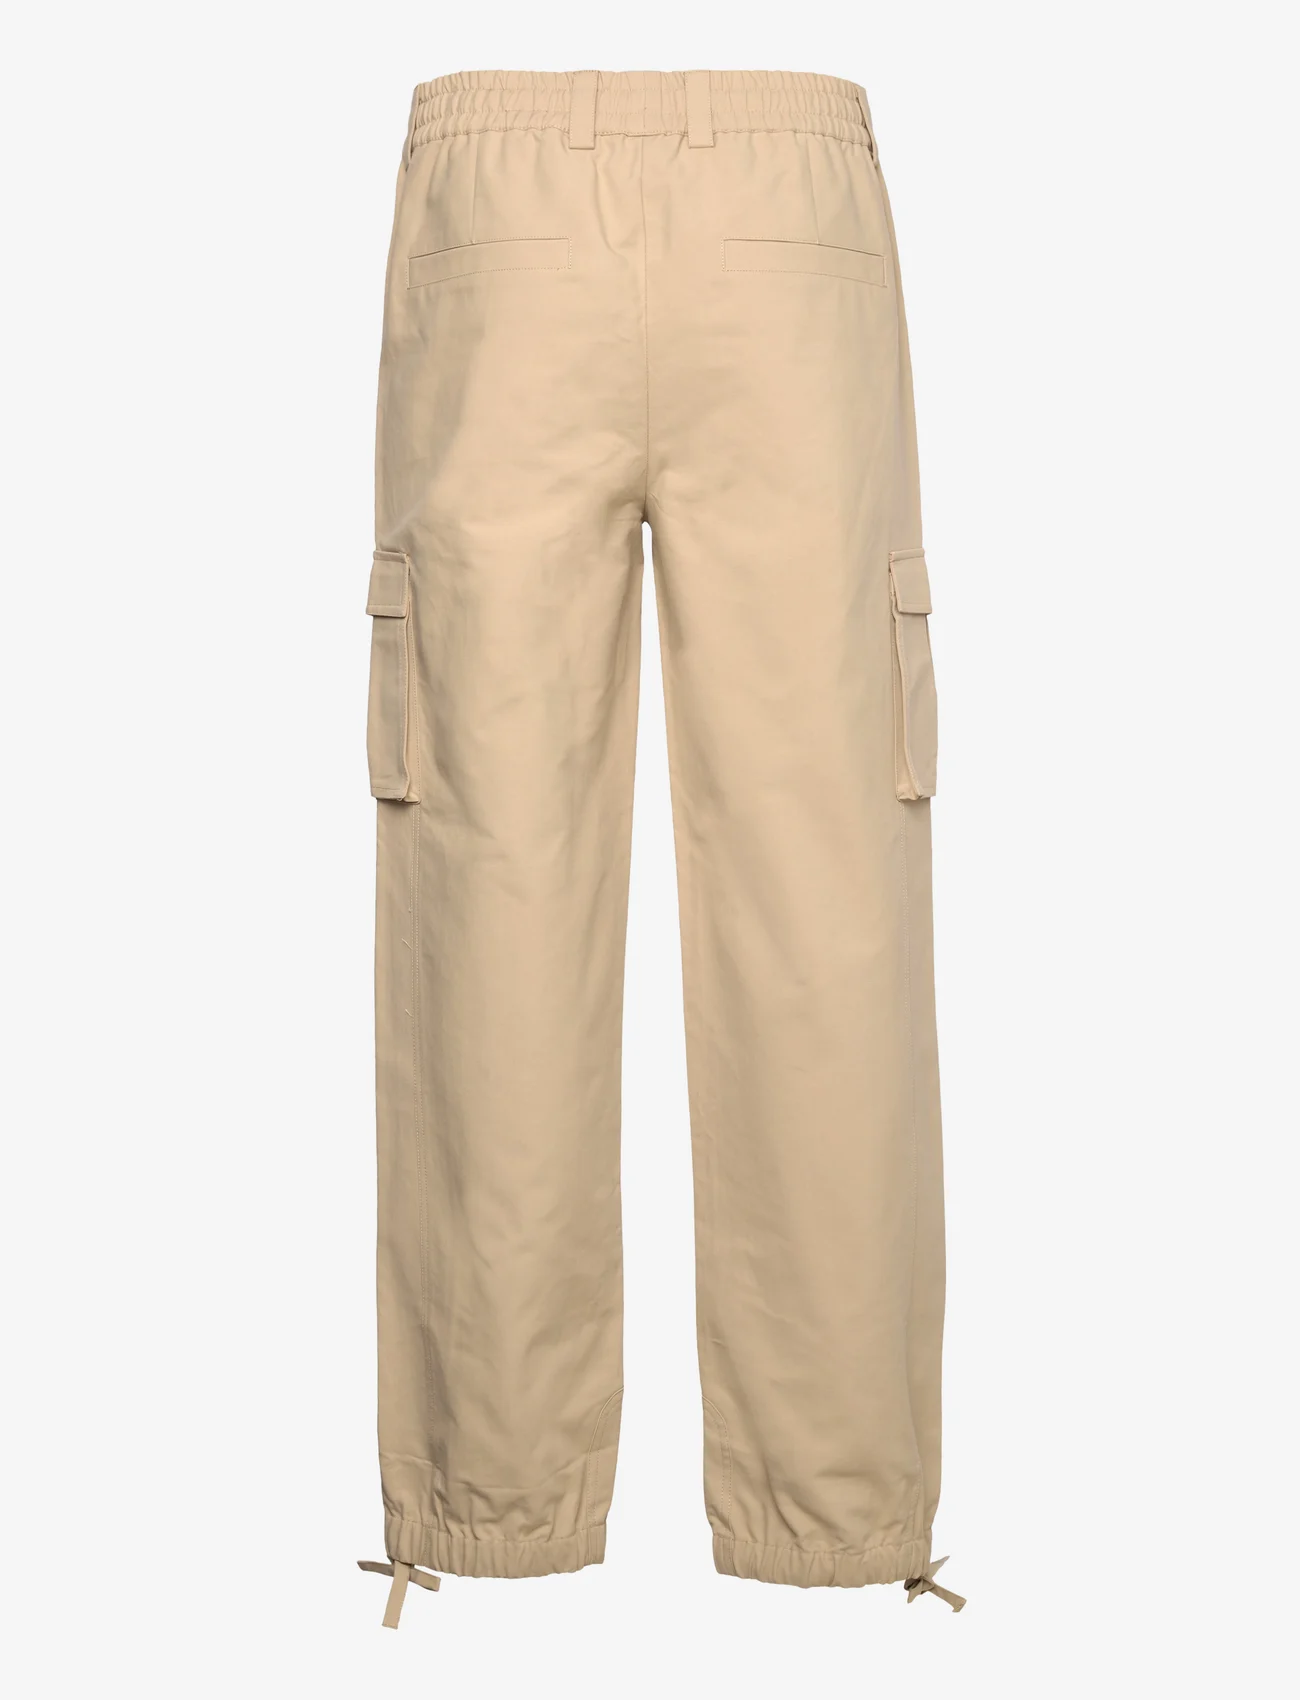 HOLZWEILER - Tribeca Cargo Trousers - cargobukser - beige - 1